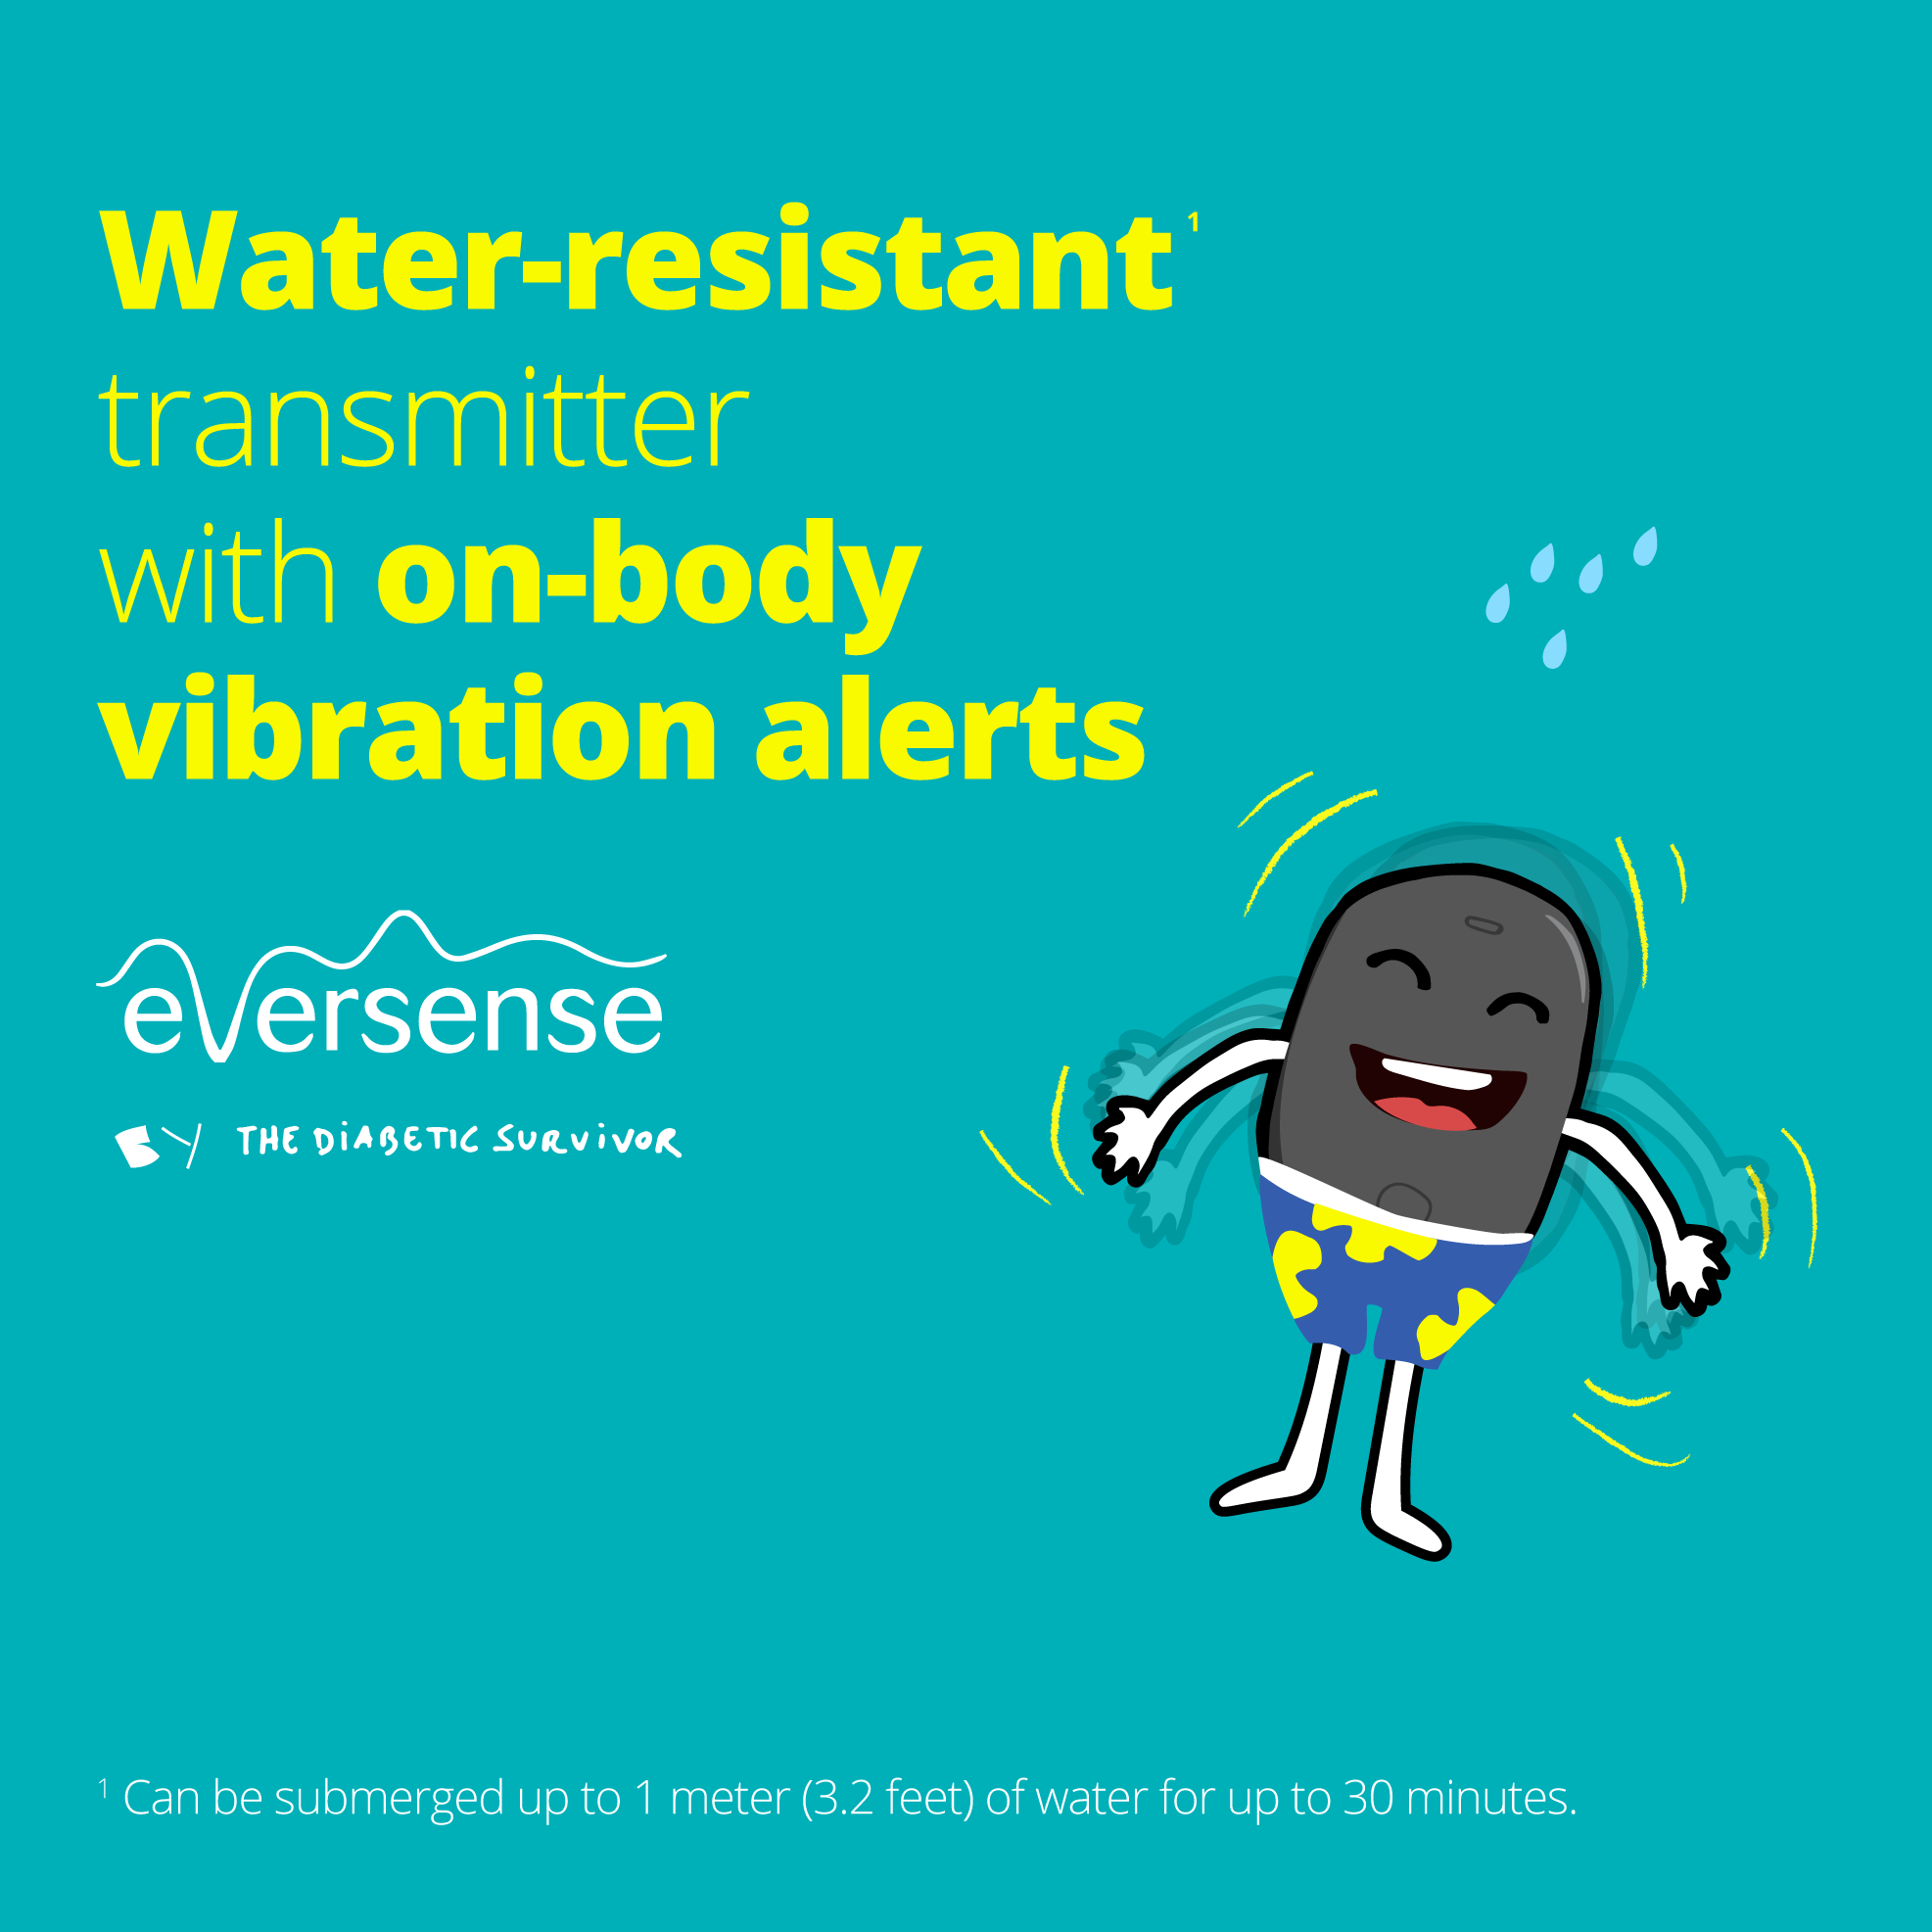 Eversense Sensor Water-resistant transmitter with on-body vibration alerts